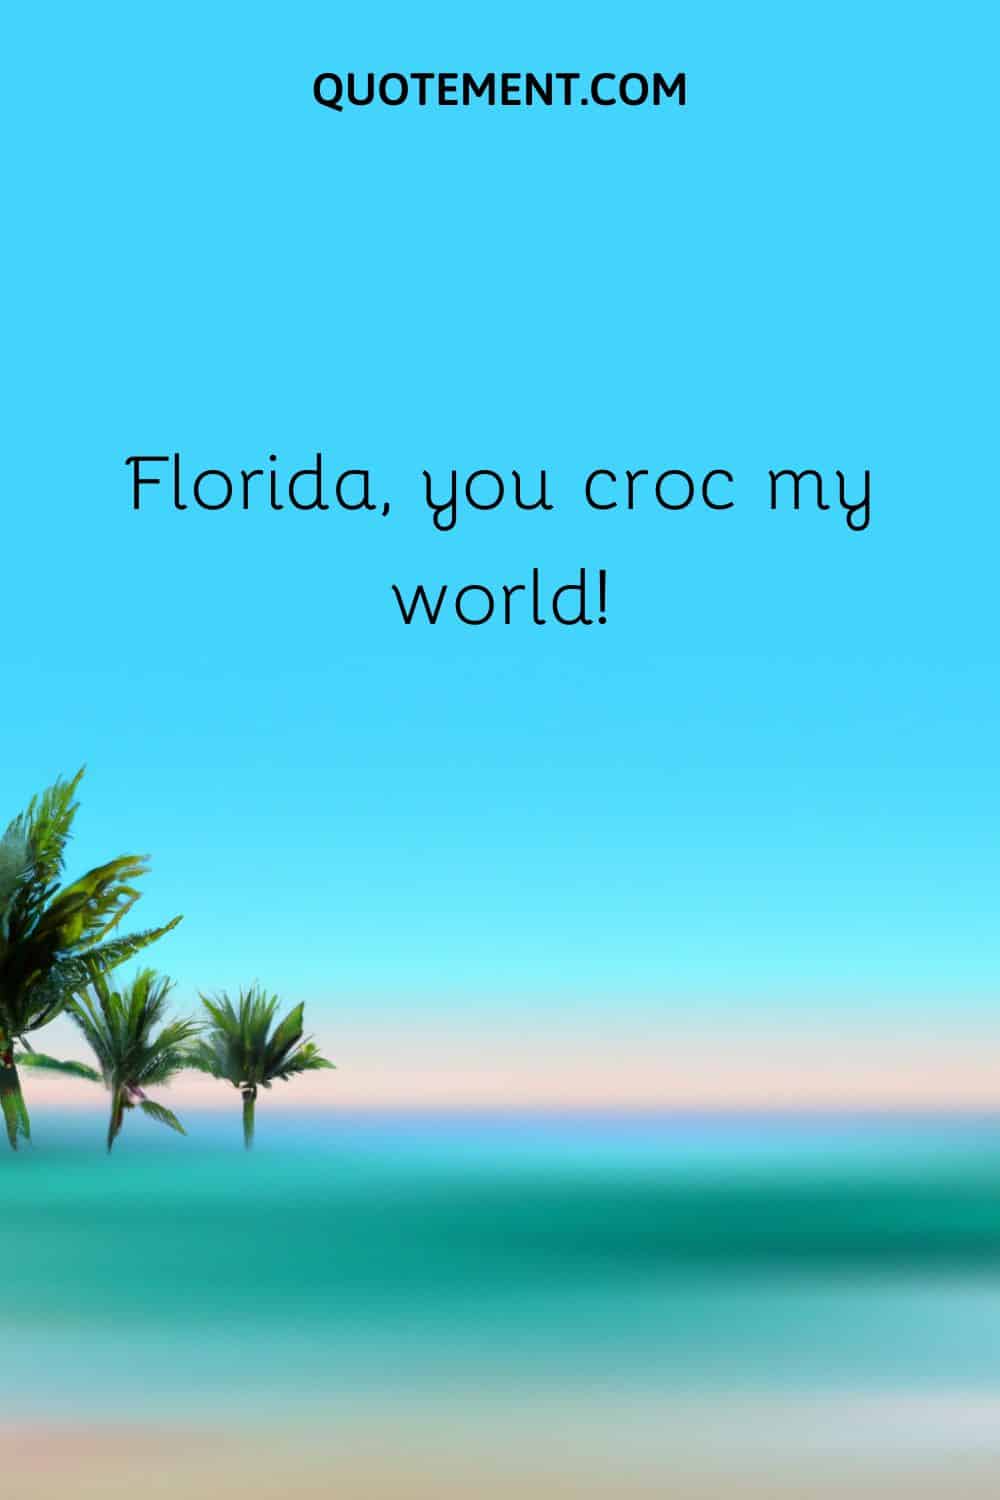  Florida, you croc my world